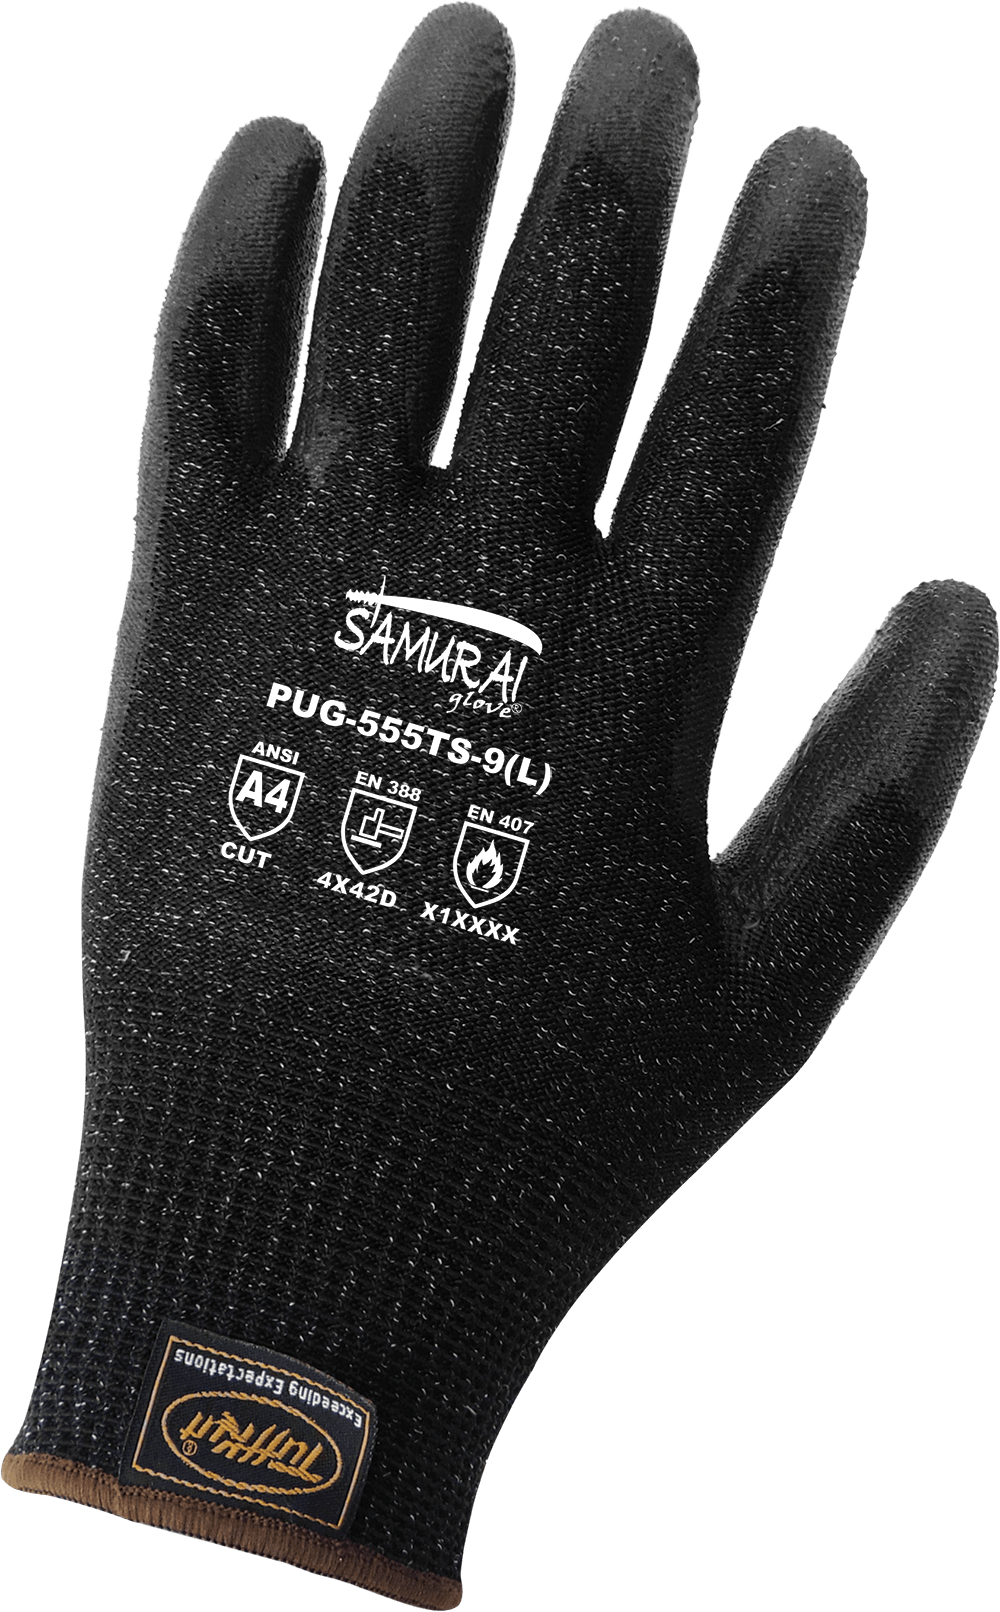 Samurai Glove® Cut Resistant Touch Screen Responsive Polyurethane Coated Gloves - PUG-555TS